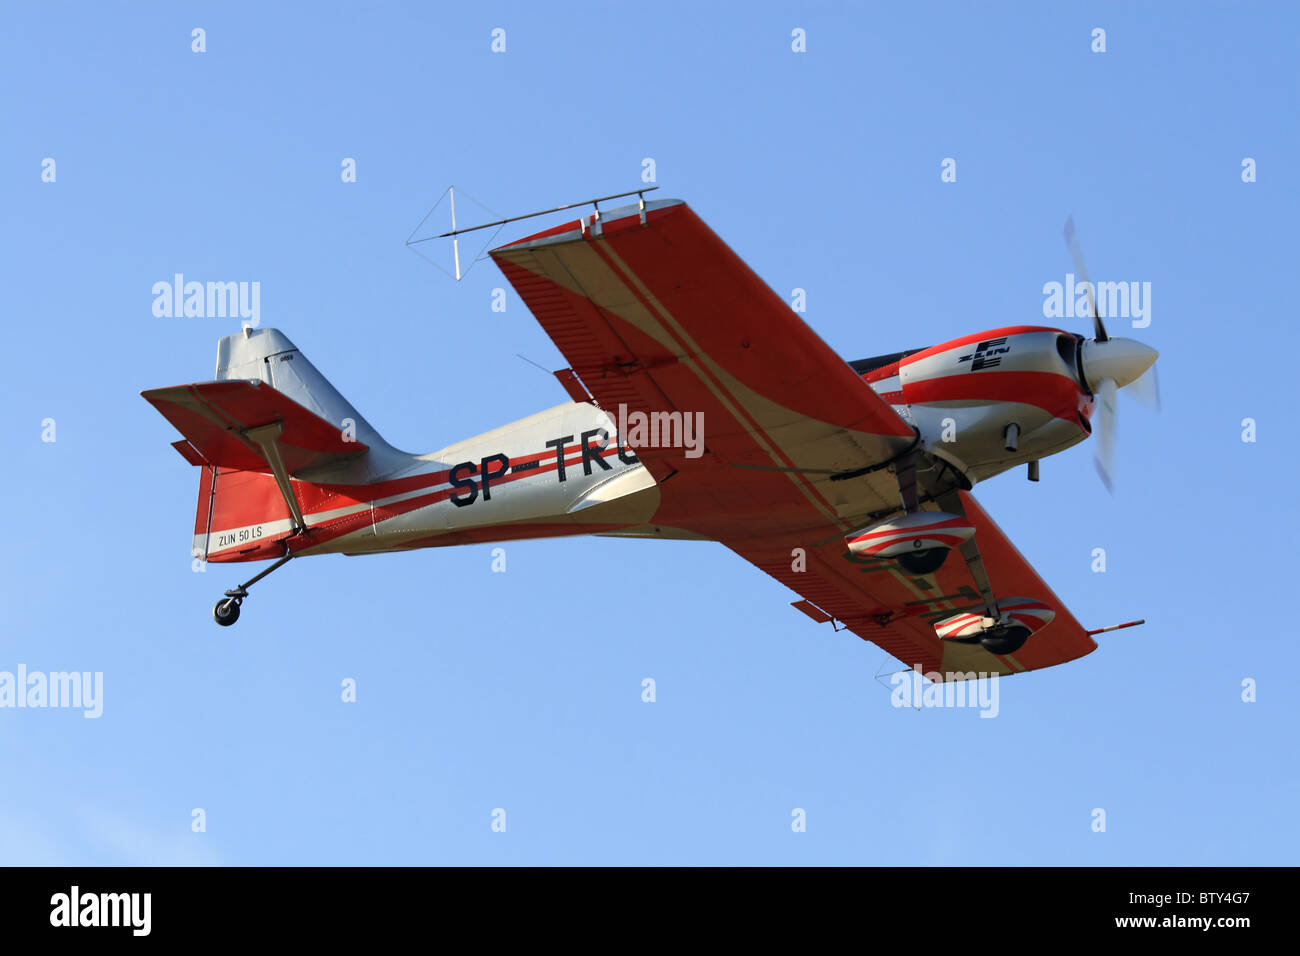 Czech sports and aerobatic aircraft Zlin 50 LS Stock Photo